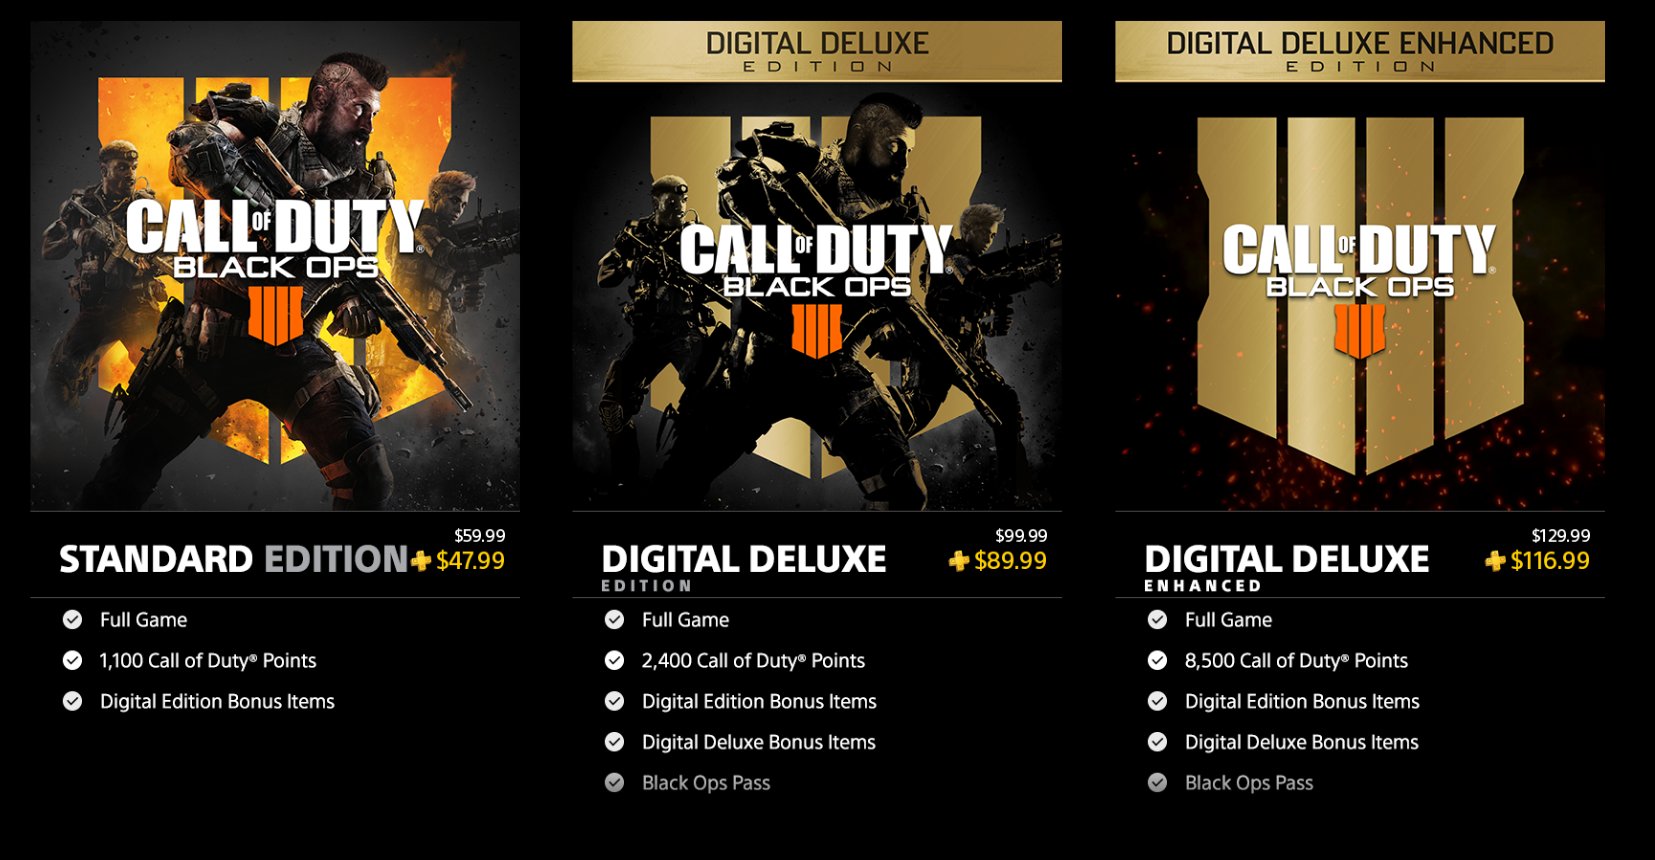 Wario64 on Twitter: "Call of Duty: Black Ops 4 is $47.99 on US PS+ (discount in cart) https://t.co/CFia8SApus Digital Deluxe $89.99, Deluxe Enhanced $116.99 https://t.co/fAowiEm4HU" / Twitter